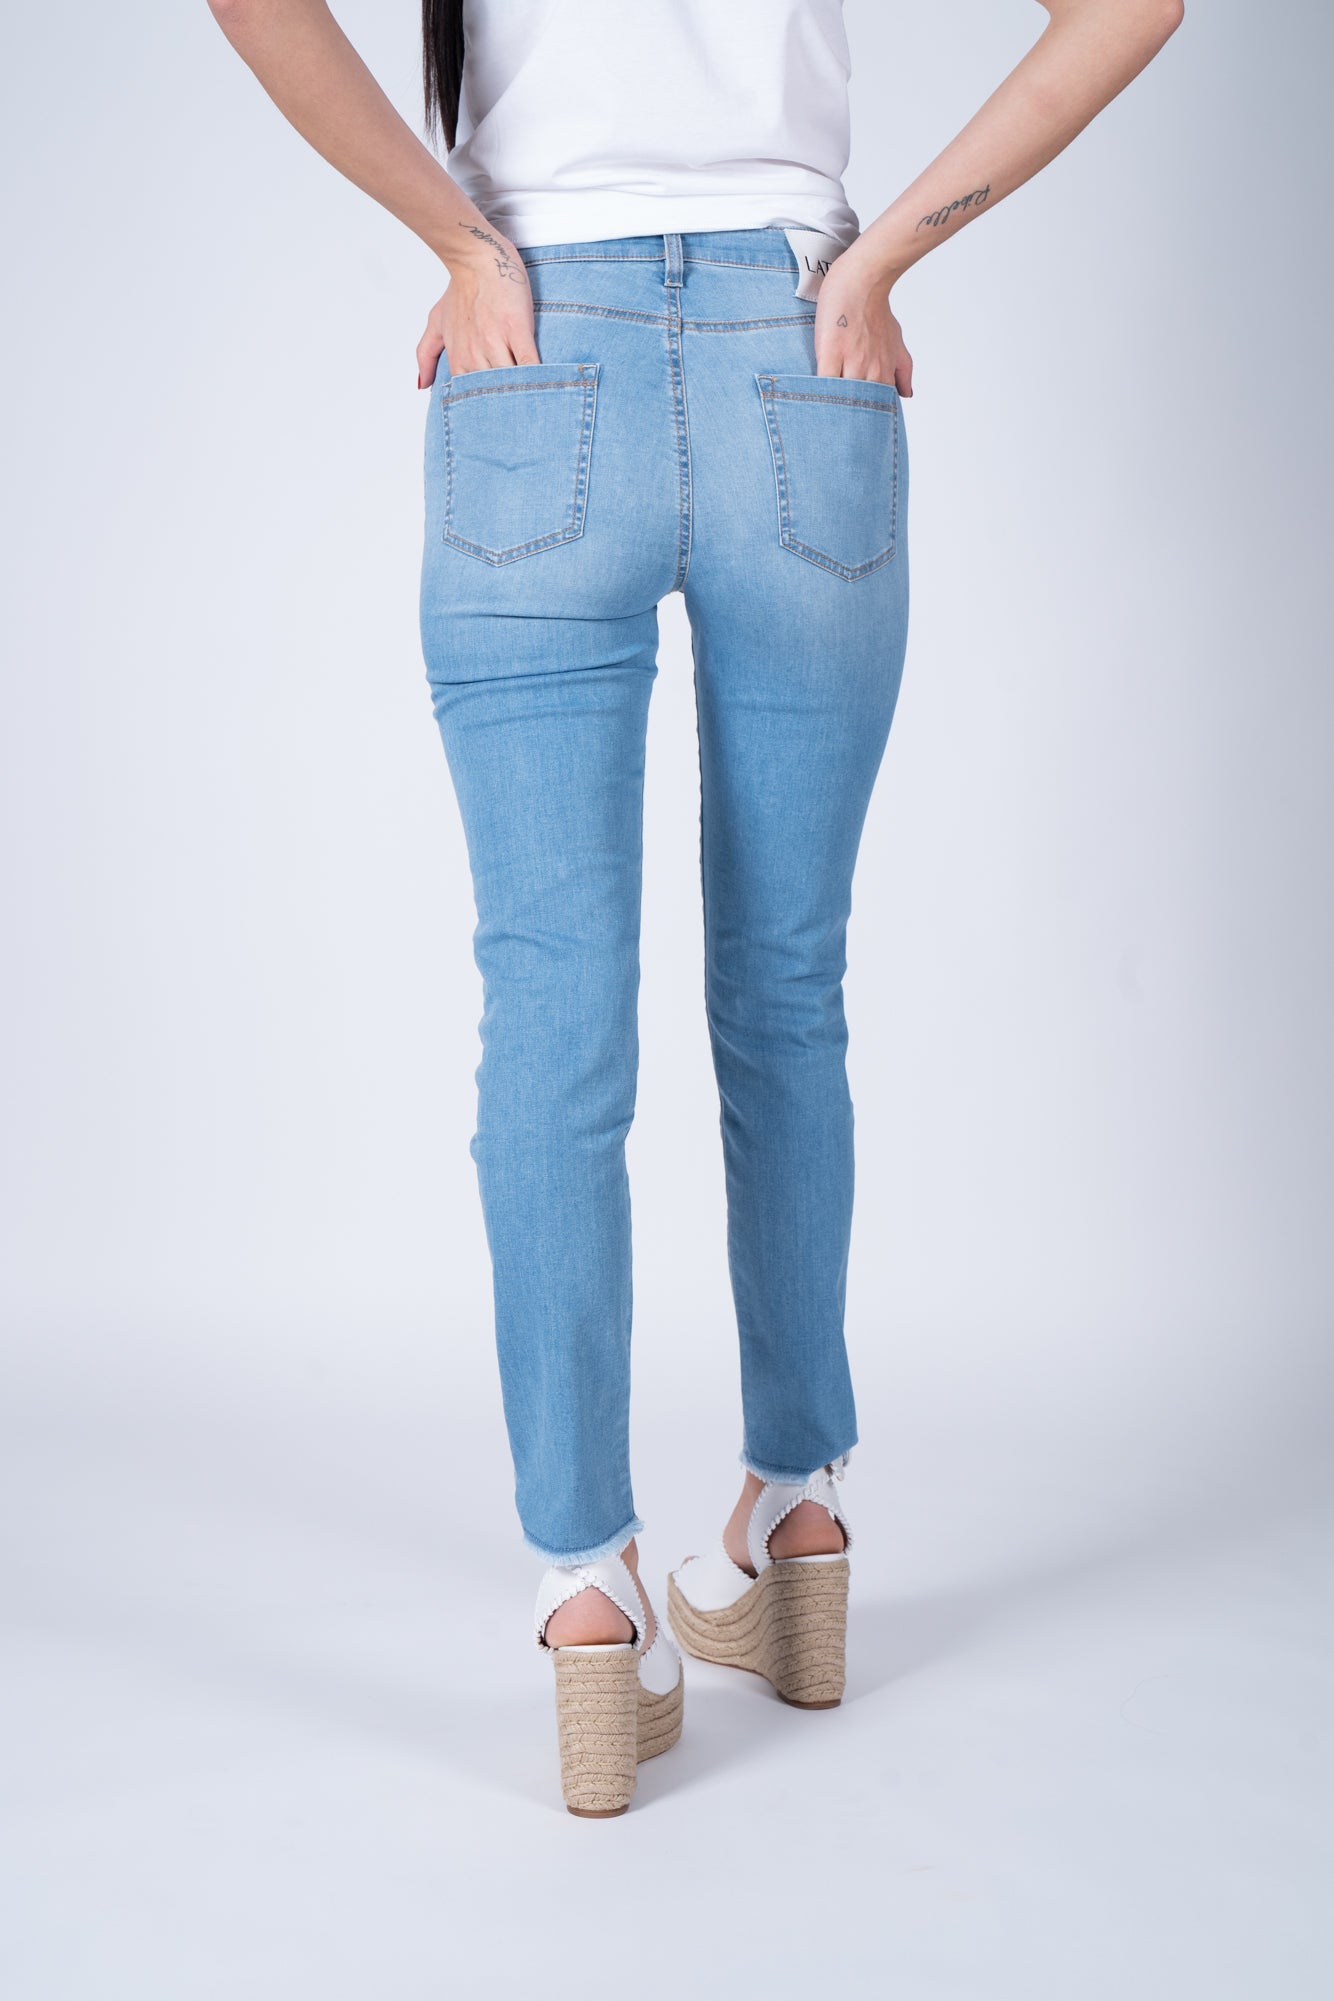 Latino' Jeans Pantalone Denim Chiaro Donna-5